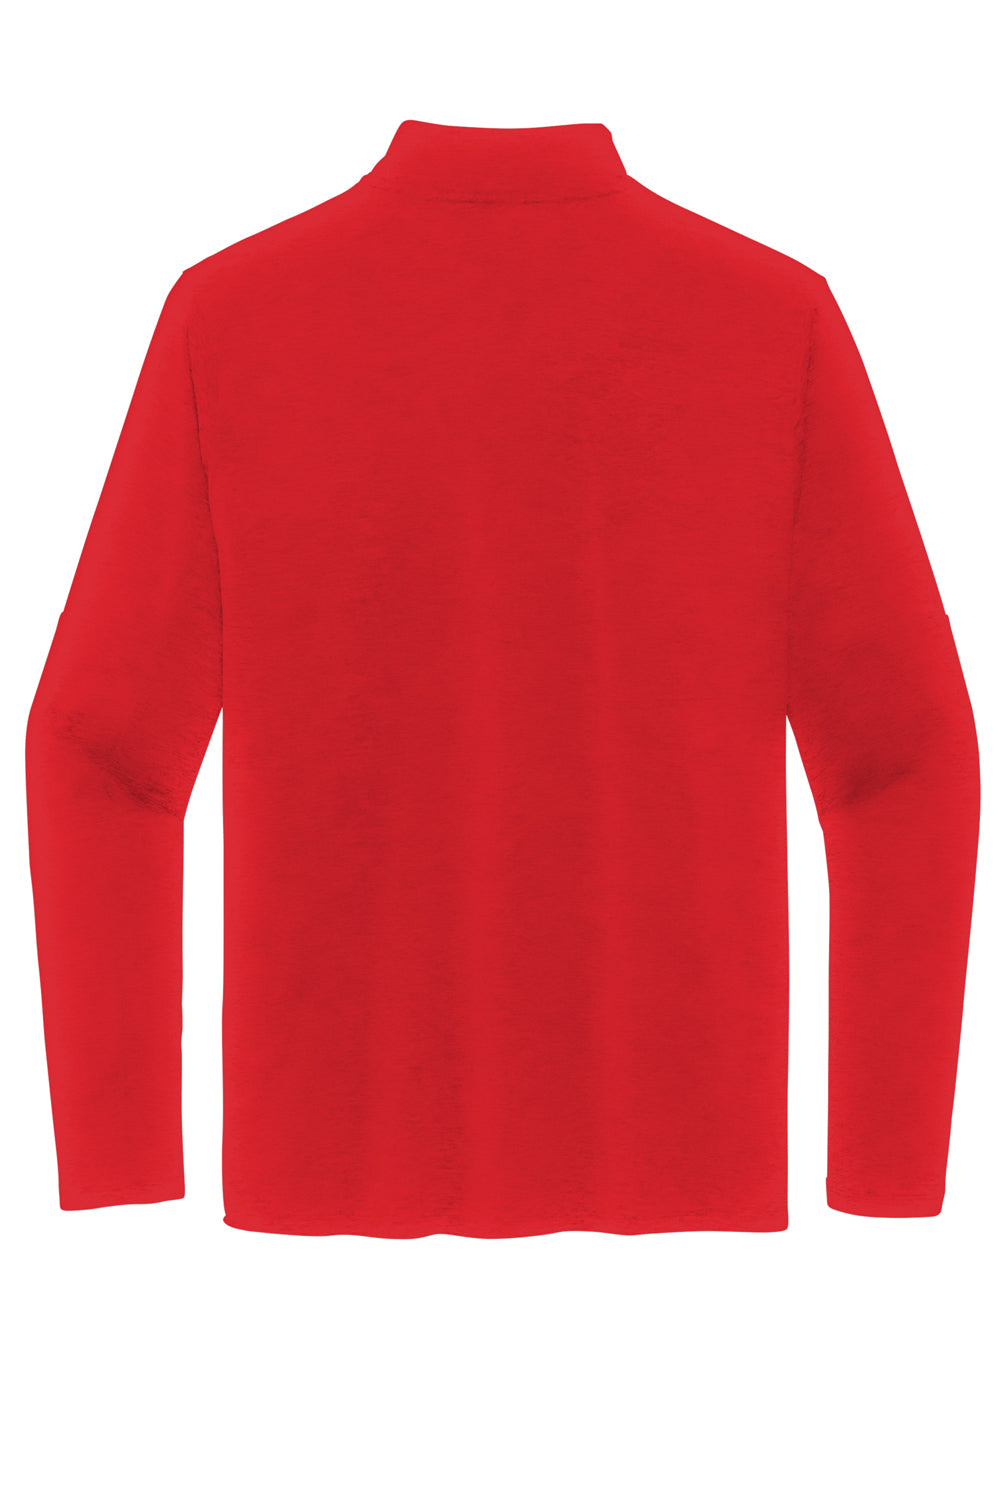 Nike NKDH4949 Mens Element Dri-Fit Moisture Wicking 1/4 Zip Sweatshirt Scarlet Red Flat Back